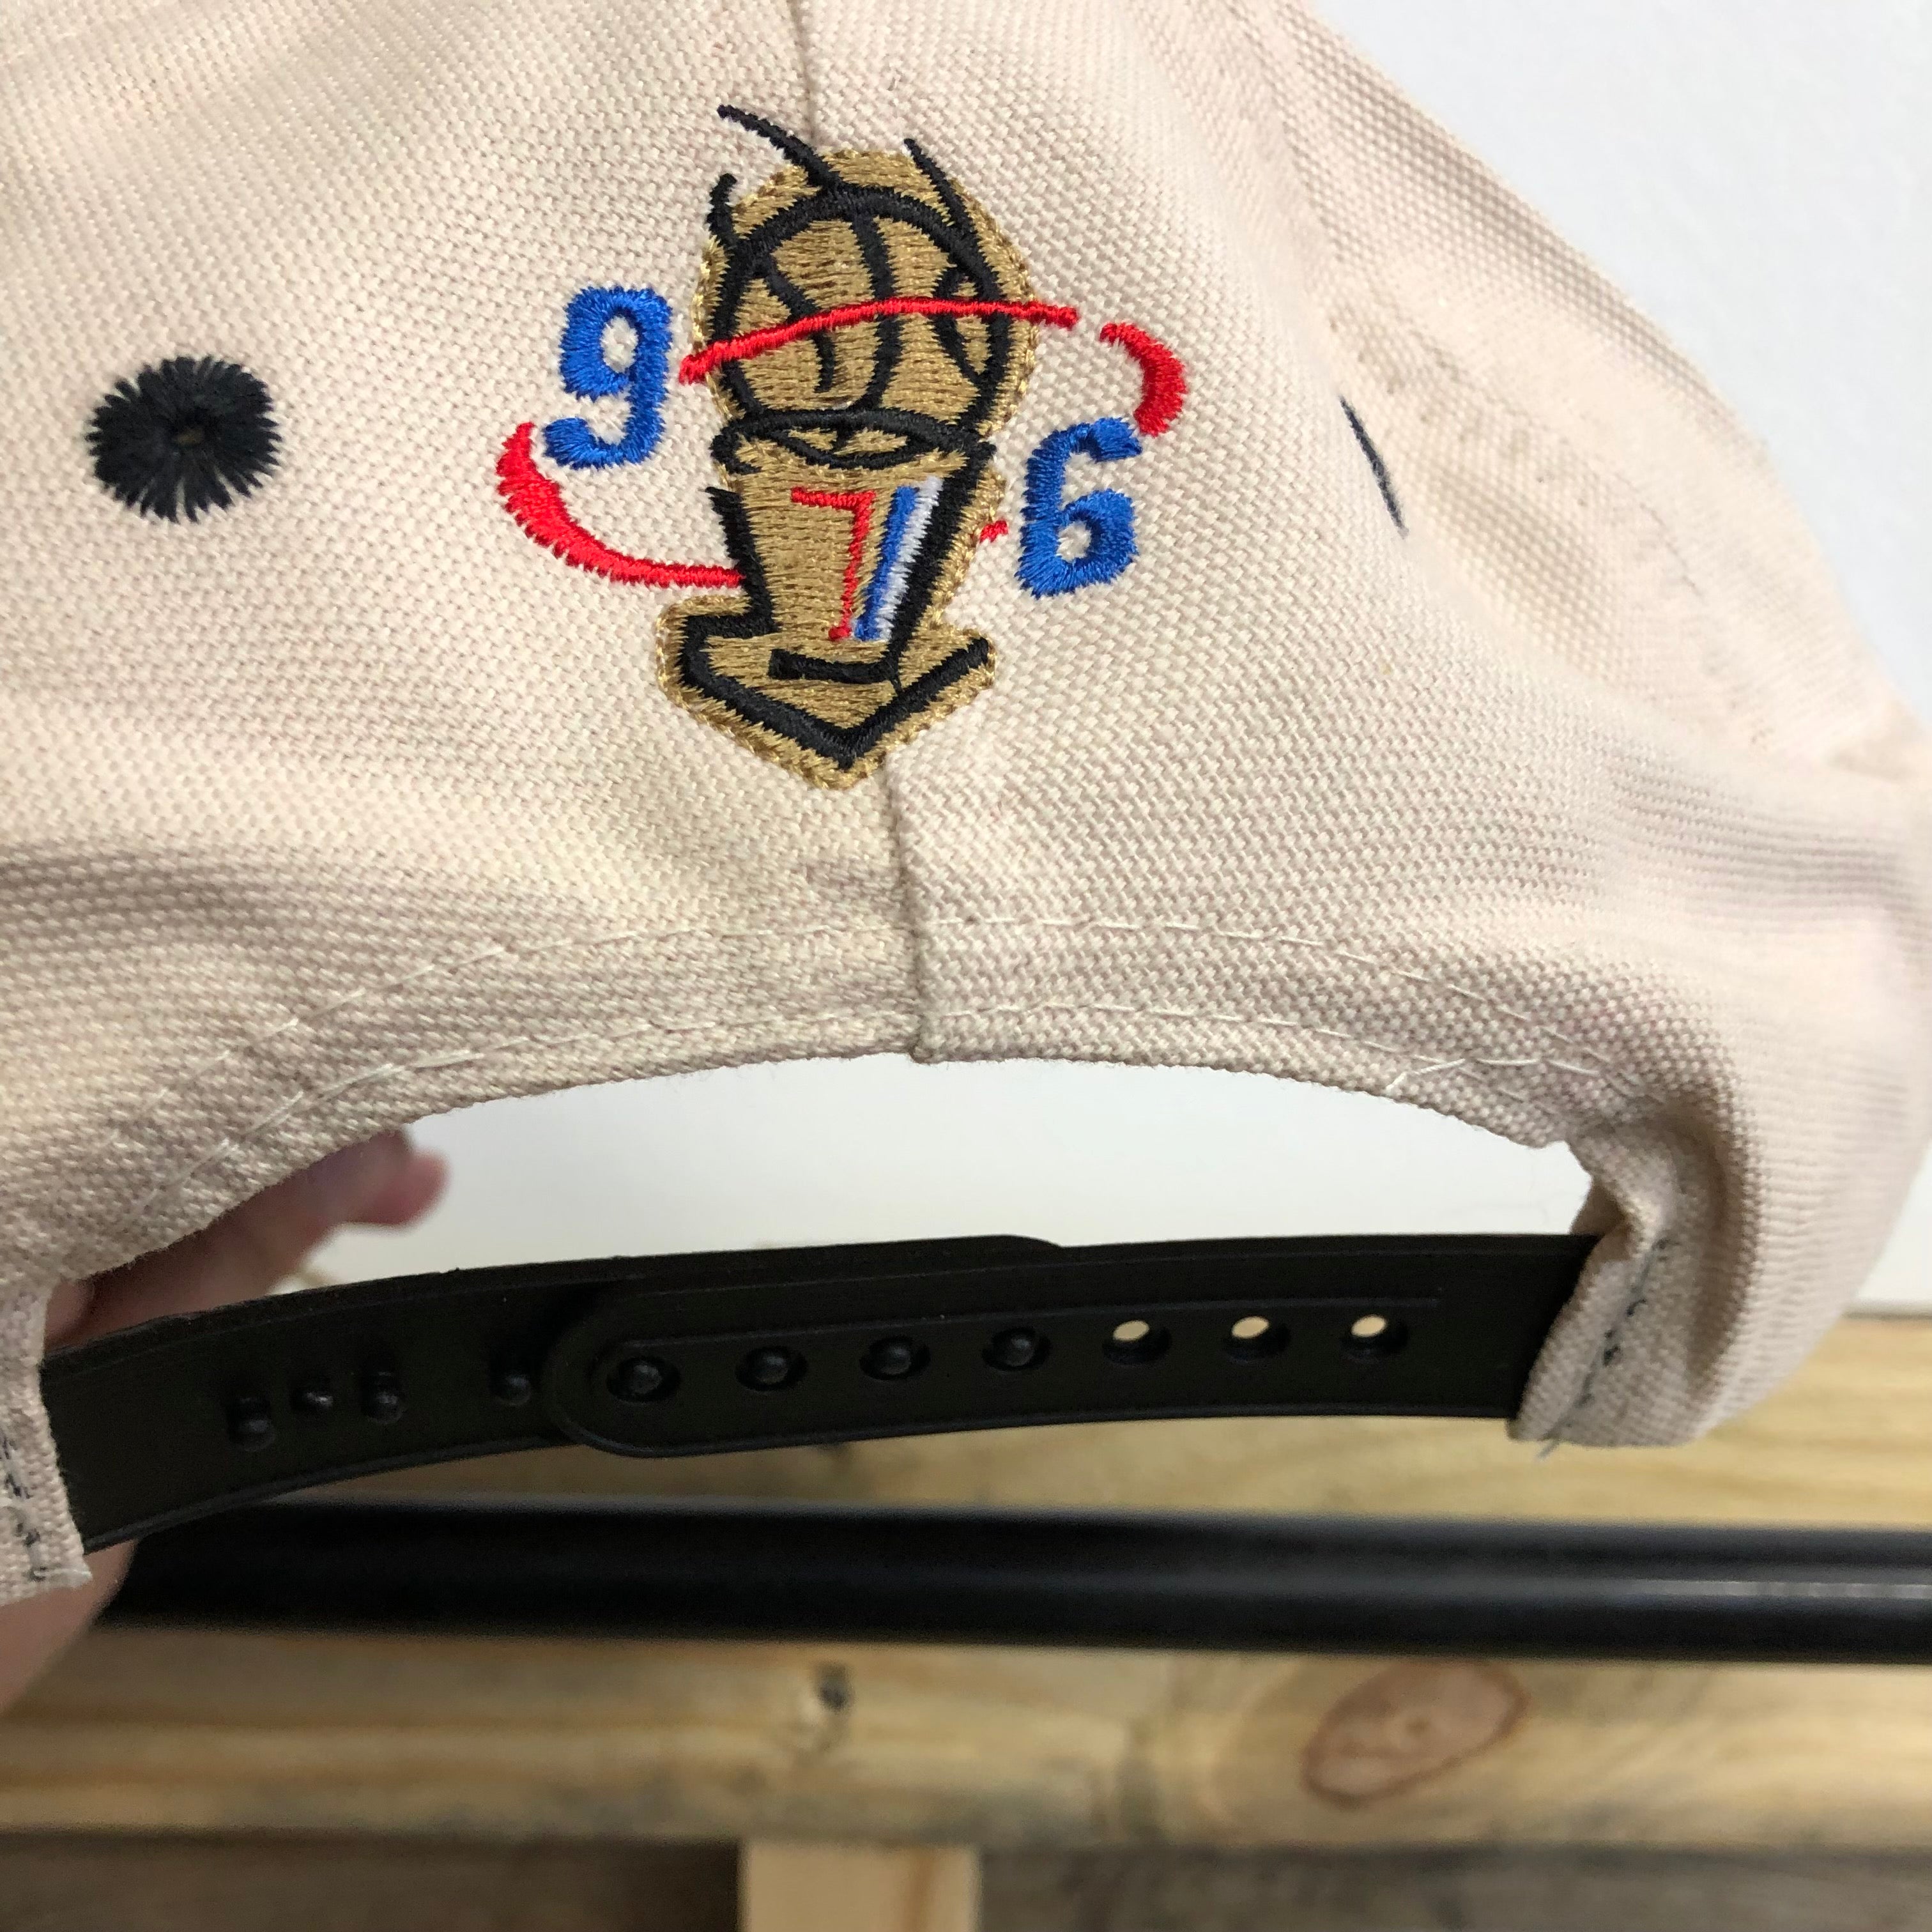 NEW Vintage Rare 1996 Chicago Bulls Champion NBA Sports Hat Cap